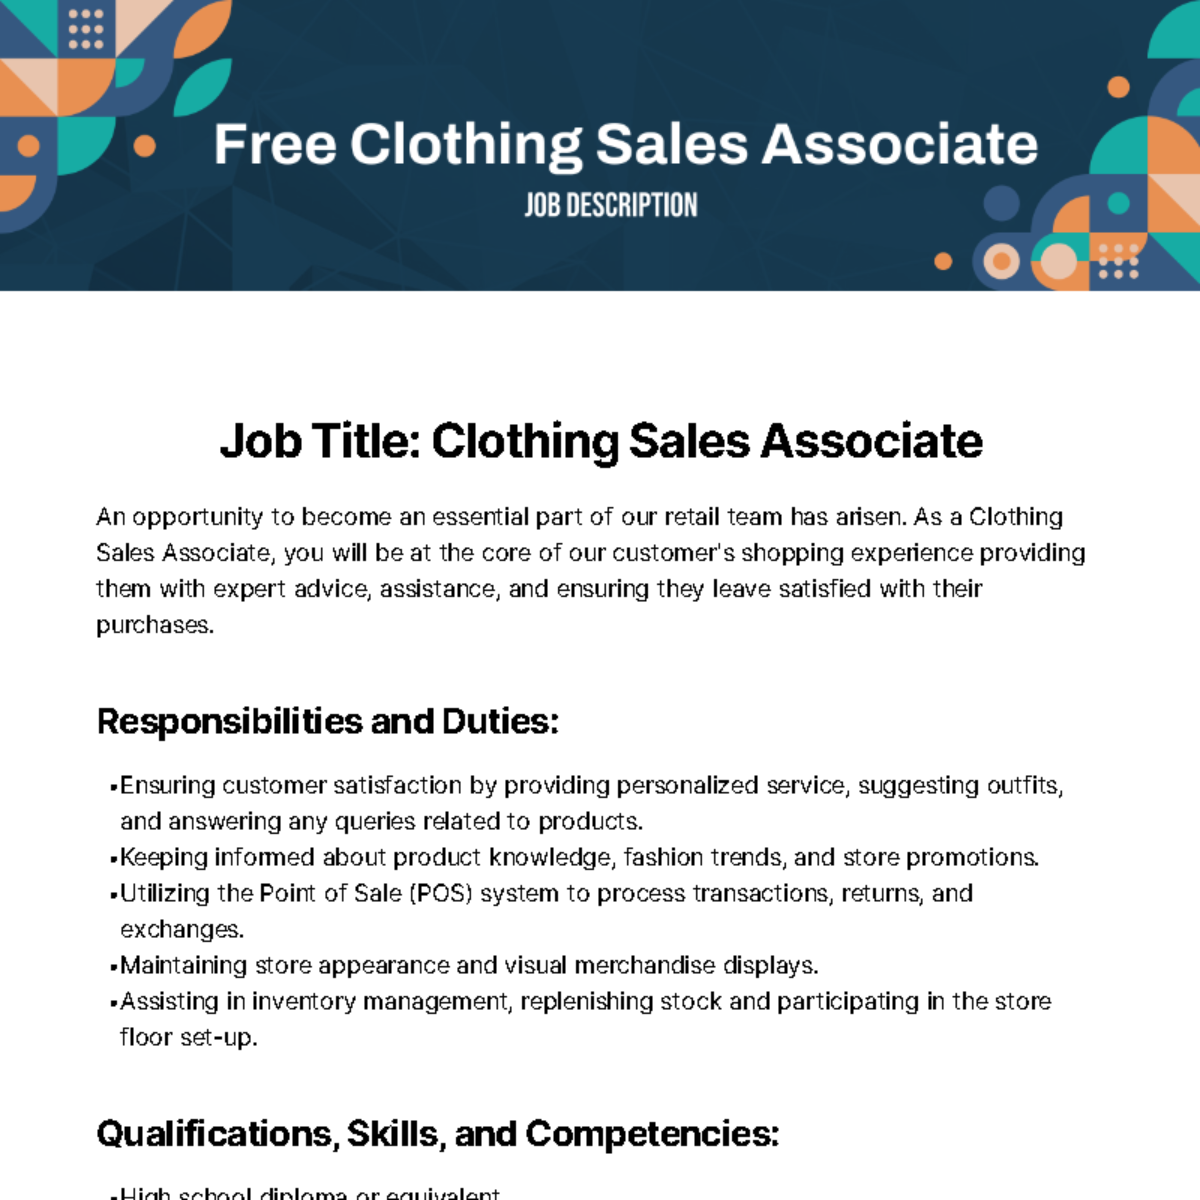 Free Clothing Sales Associate Job Description Template